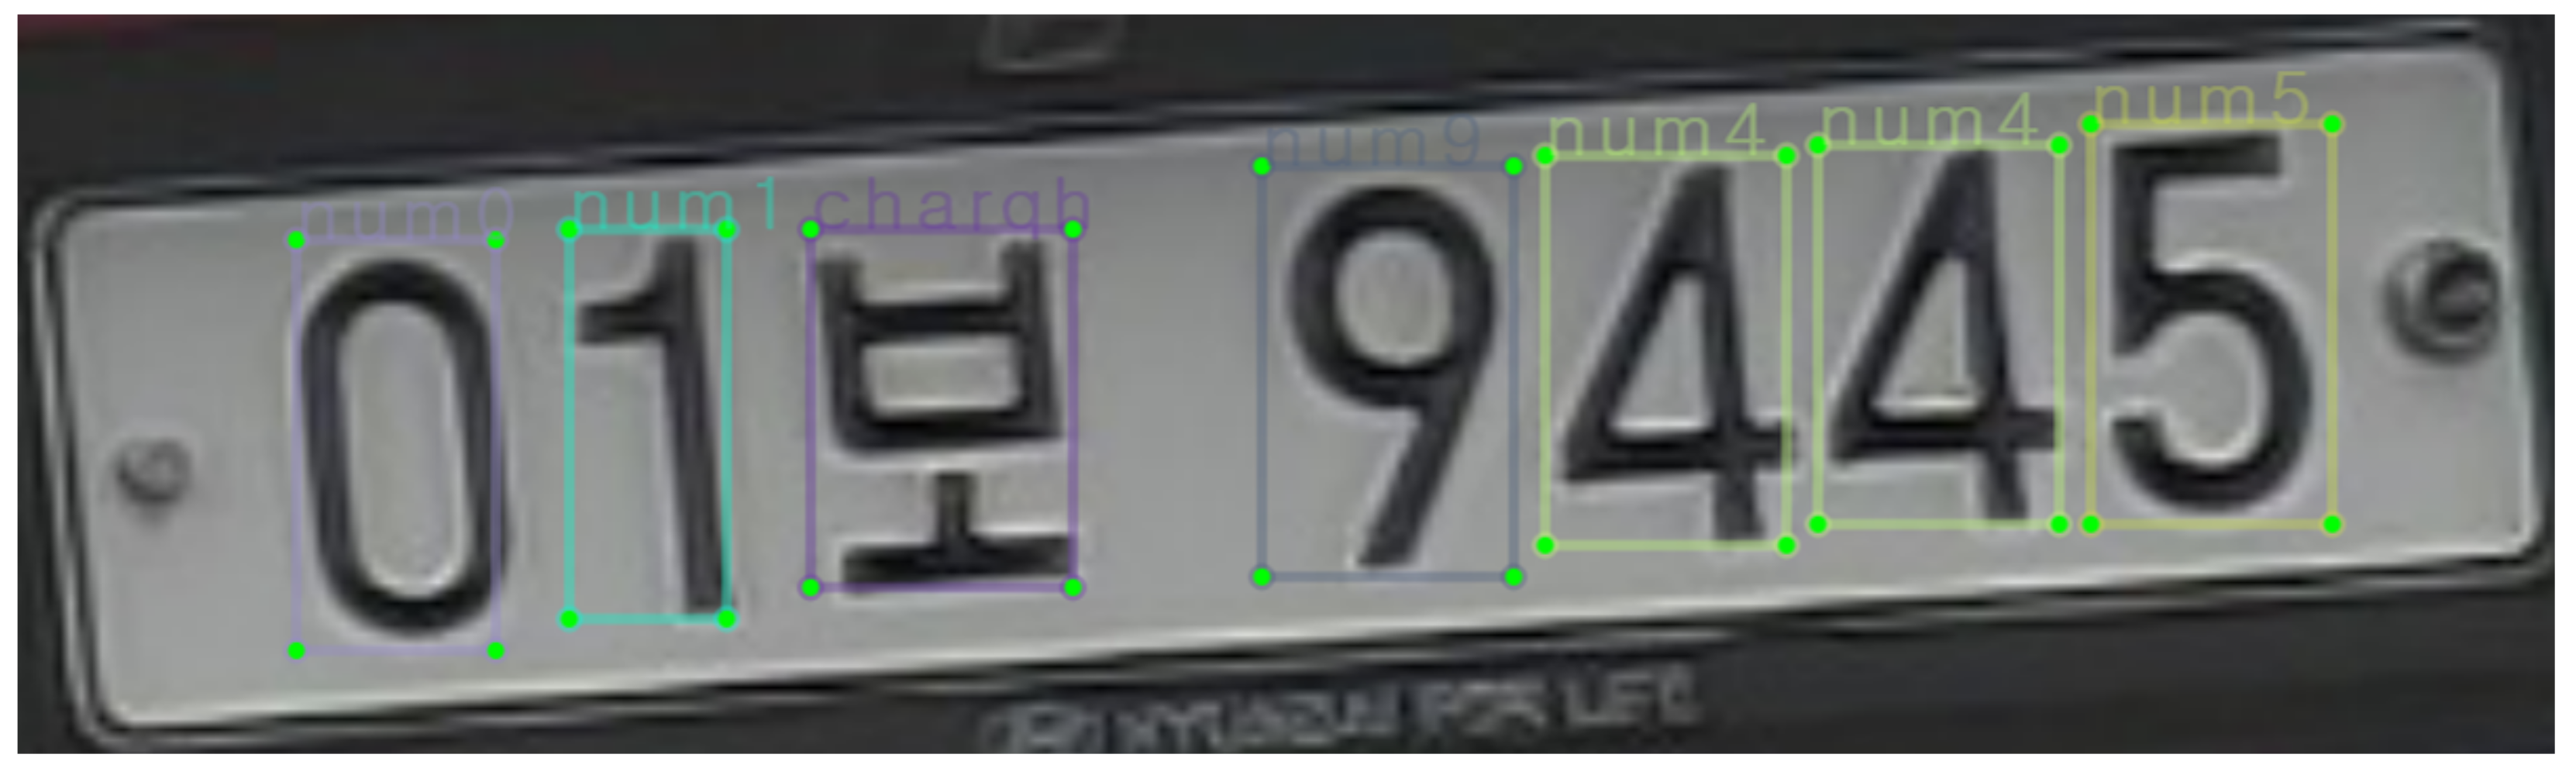 Um number plate